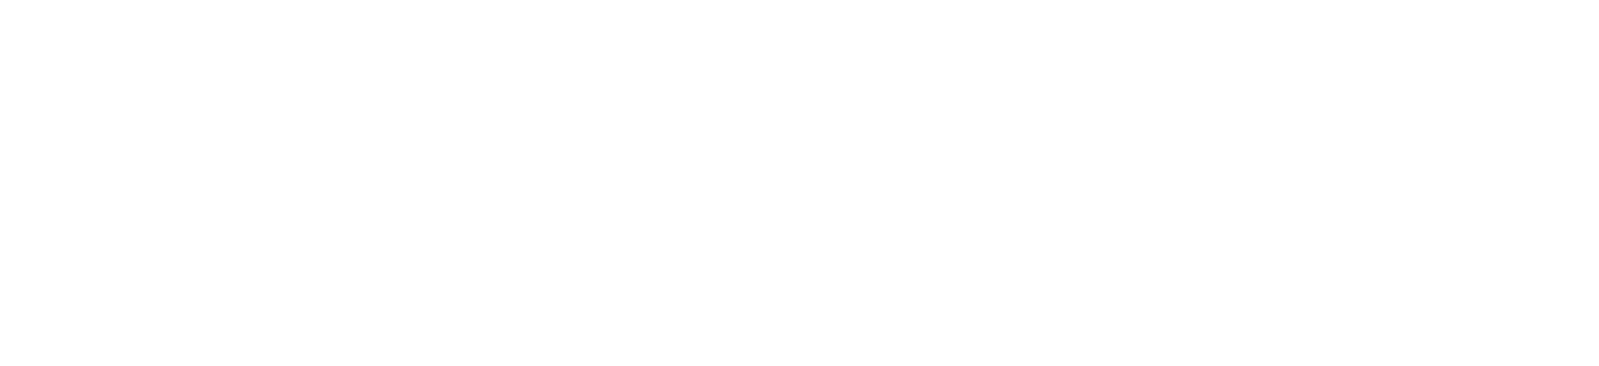 AVEVA logo grand pour les fonds sombres (PNG transparent)